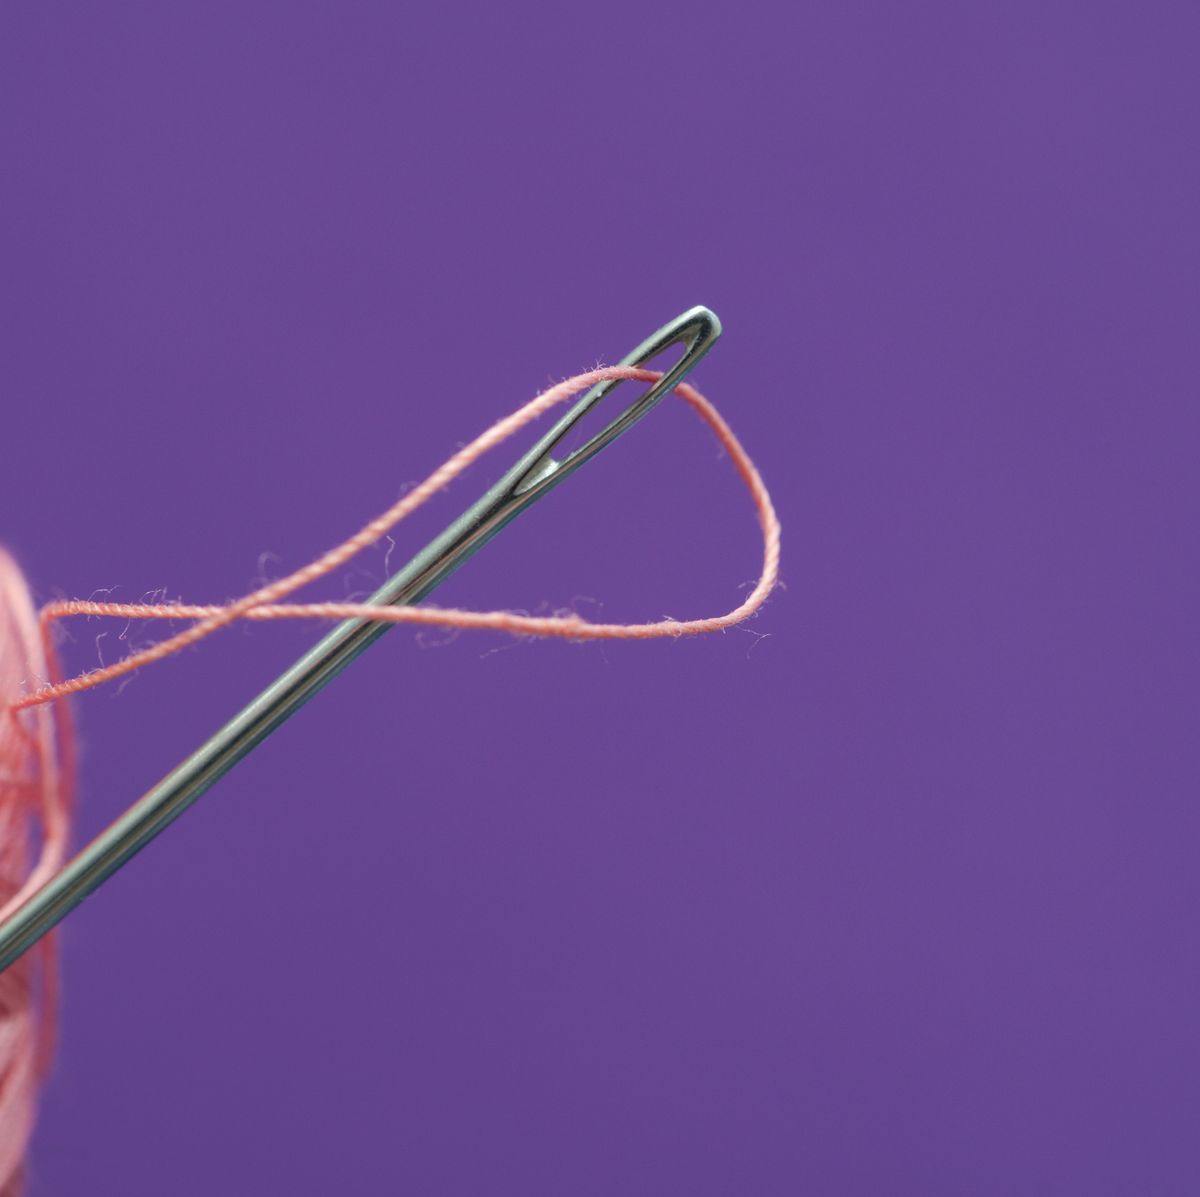 How to Thread a Yarn Needle - the EASY way. 